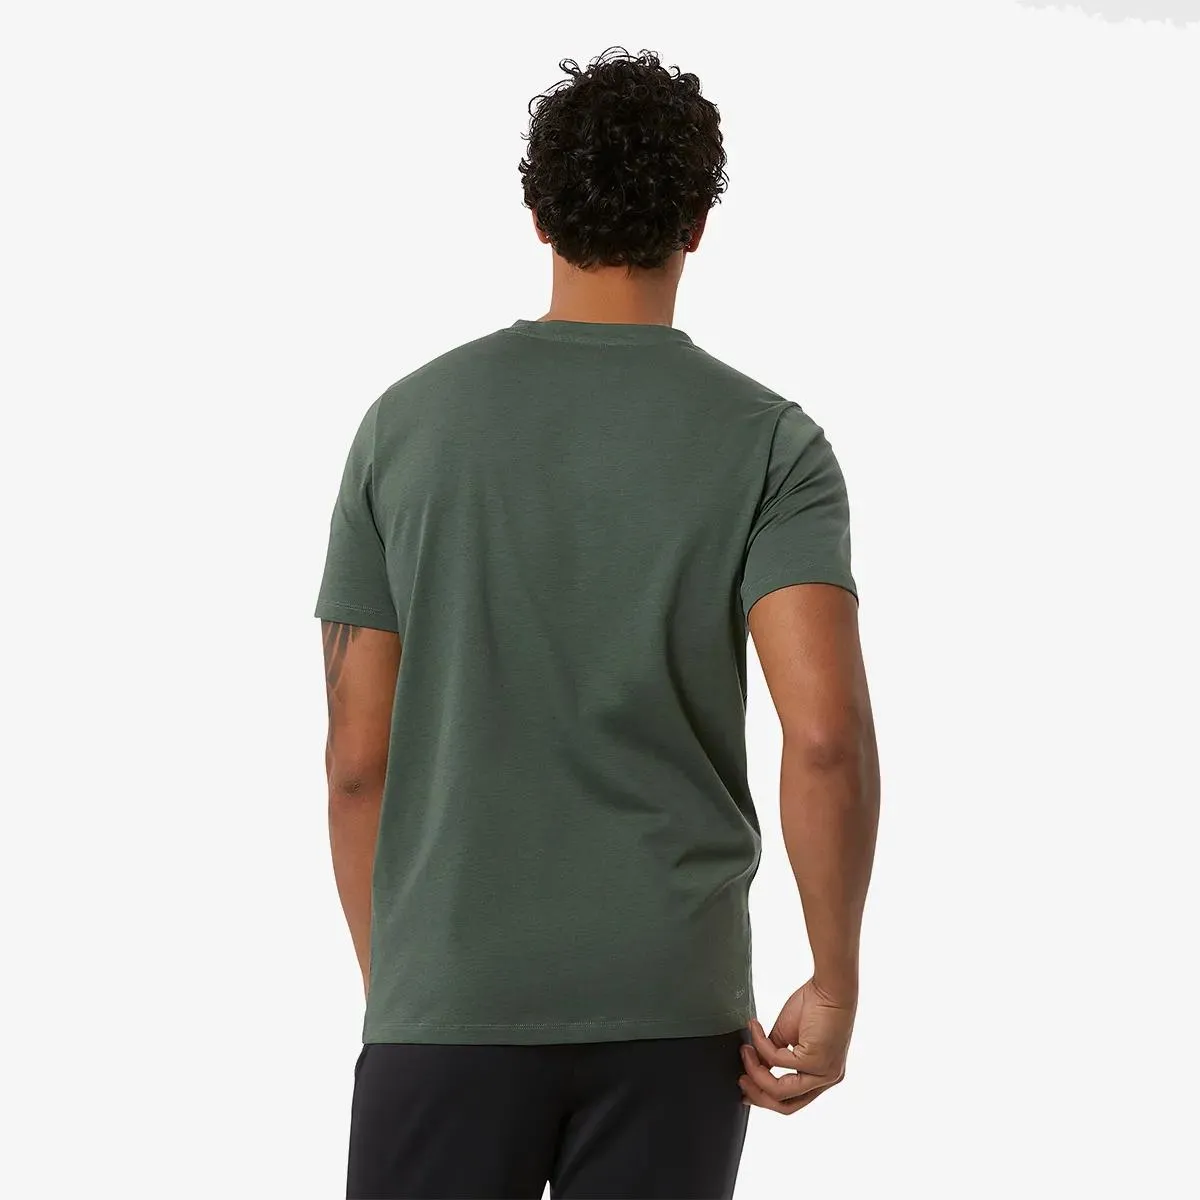 New Balance T-shirt Heathertech 